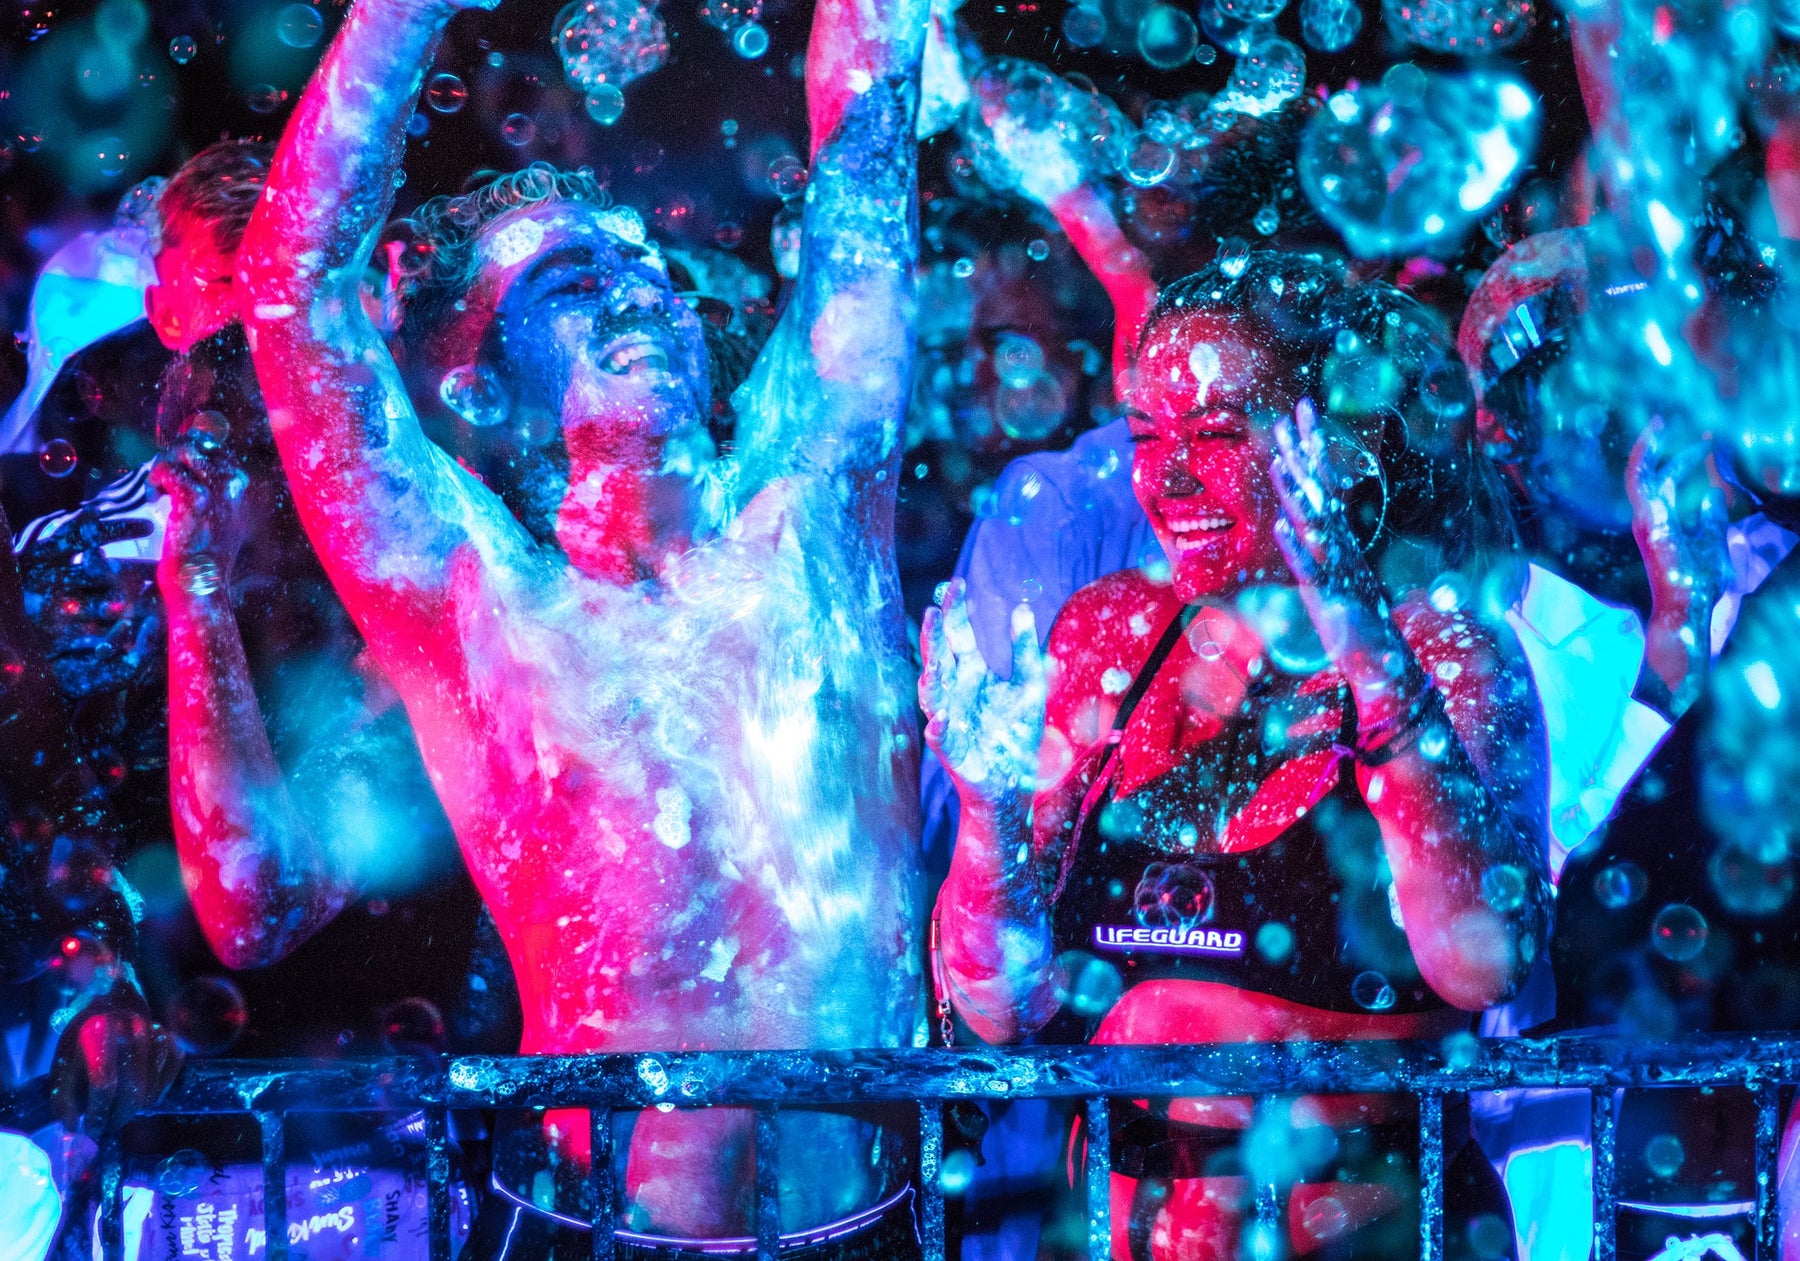 Tekno bubbles at a blacklight festival 